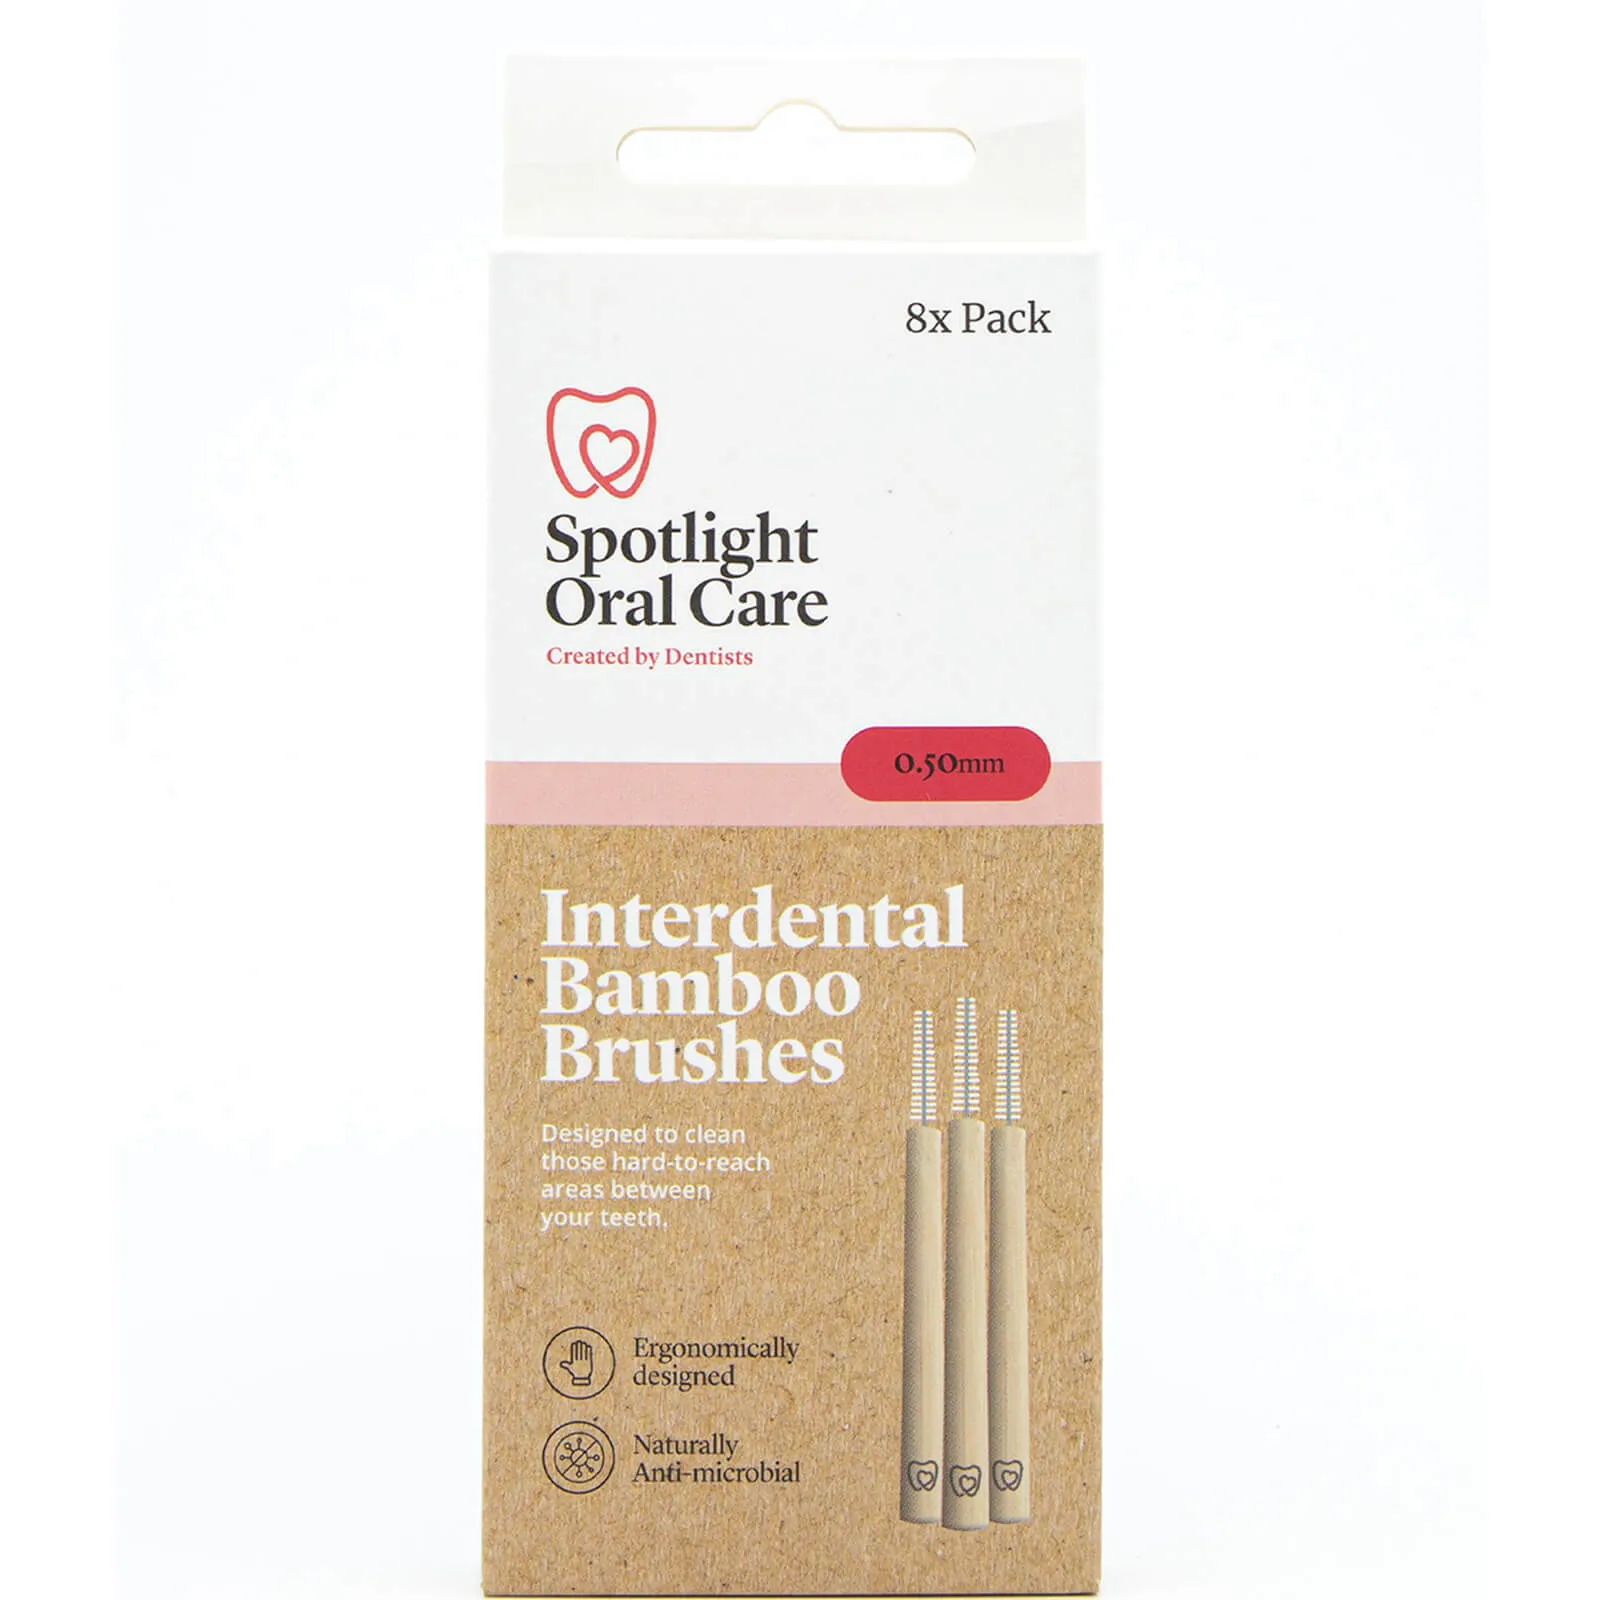  Interdental Bamboo Brushes - 0.5 Interdental Bamboo Brushes